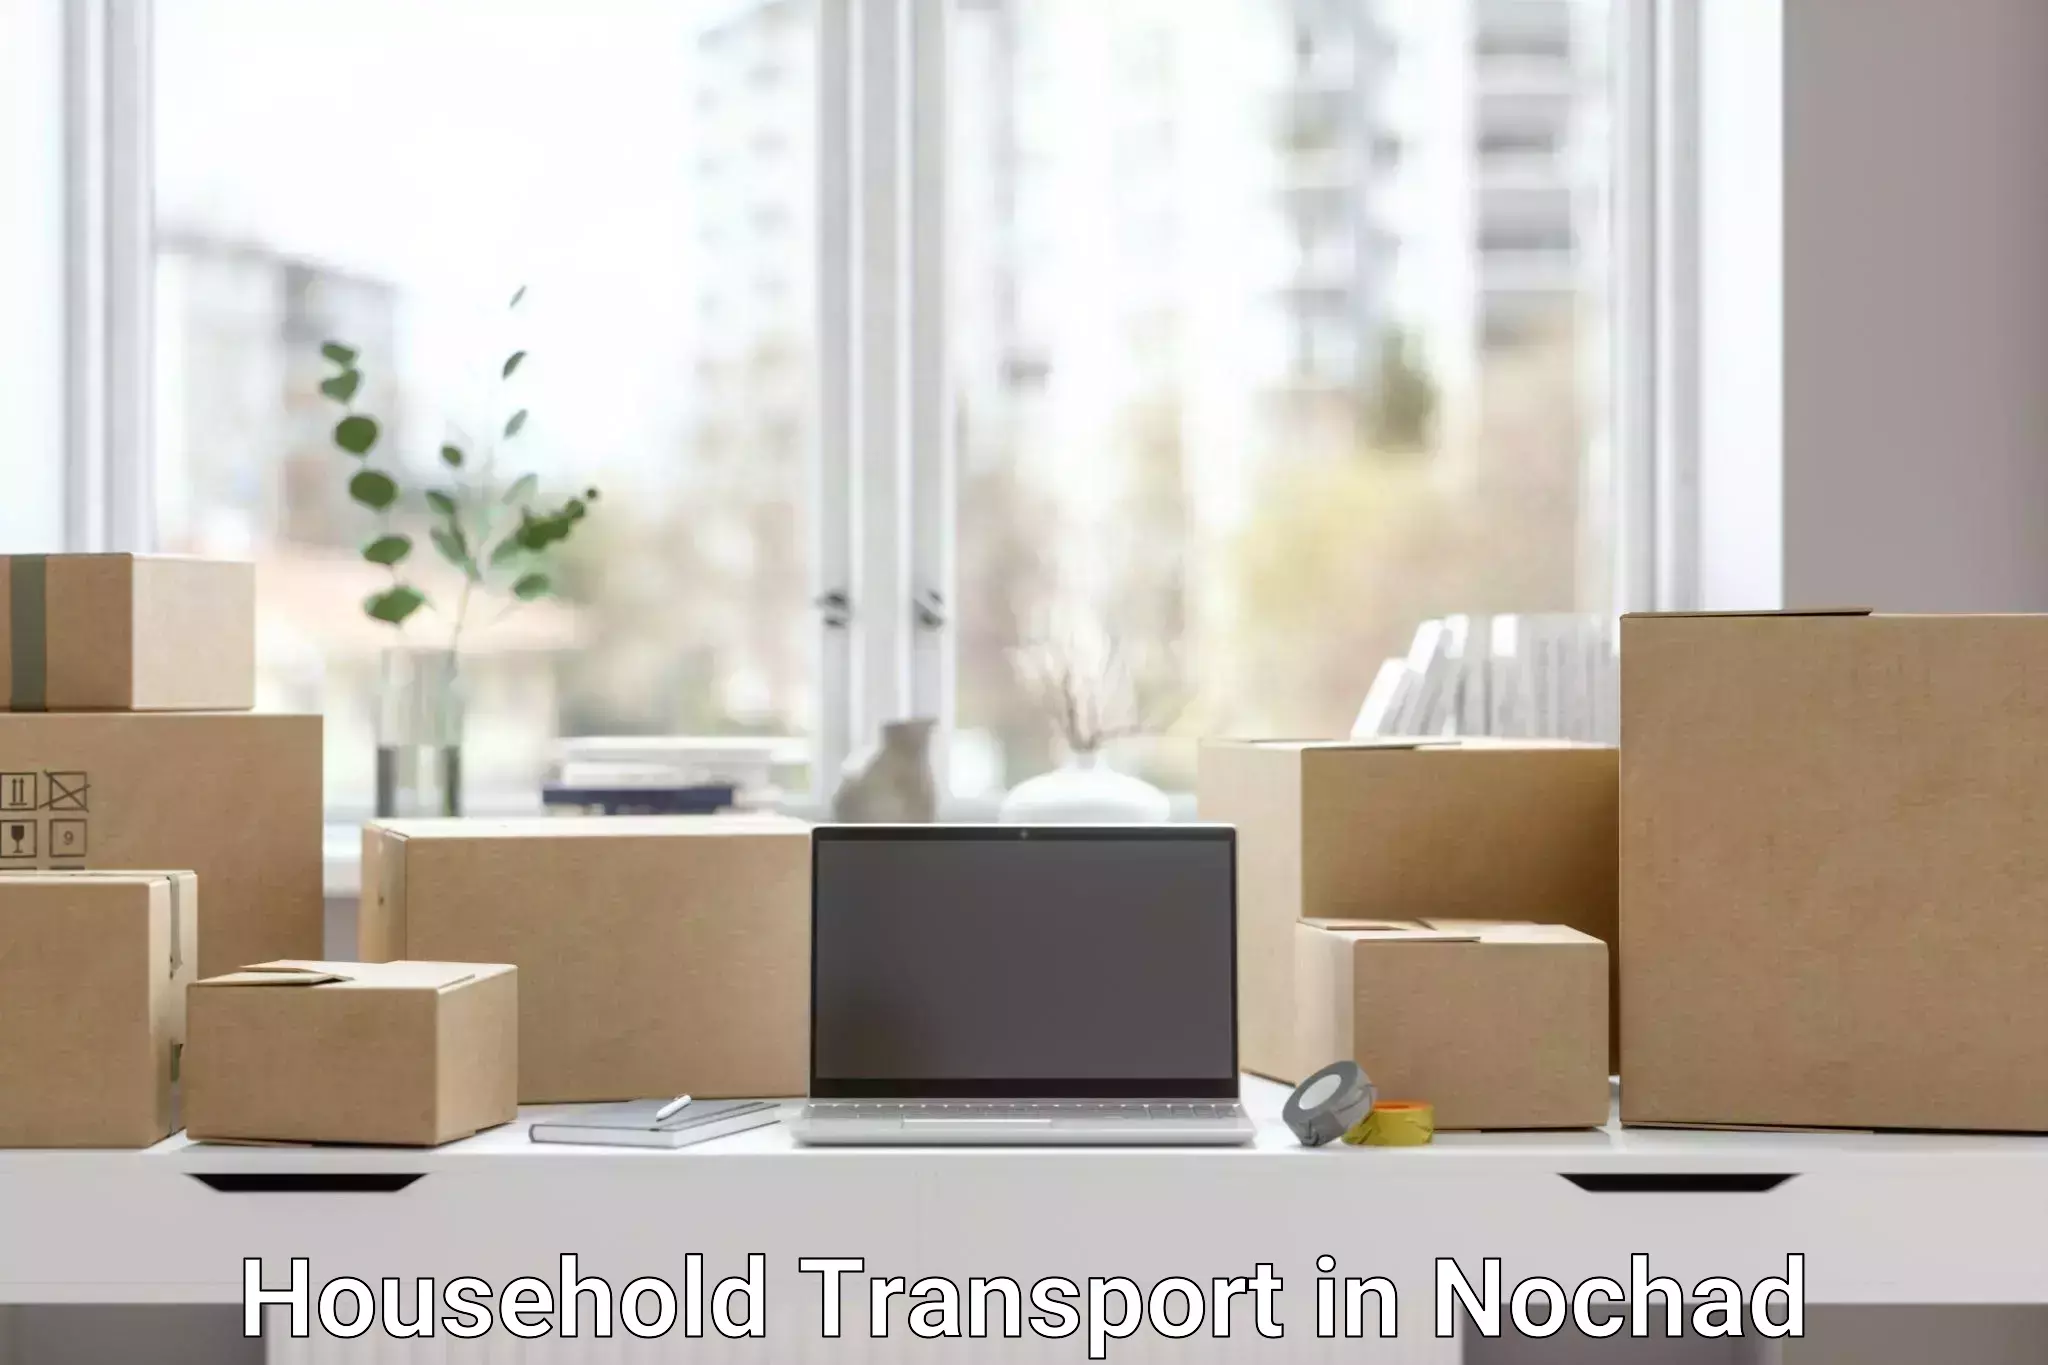 Professional furniture relocation in Nochad